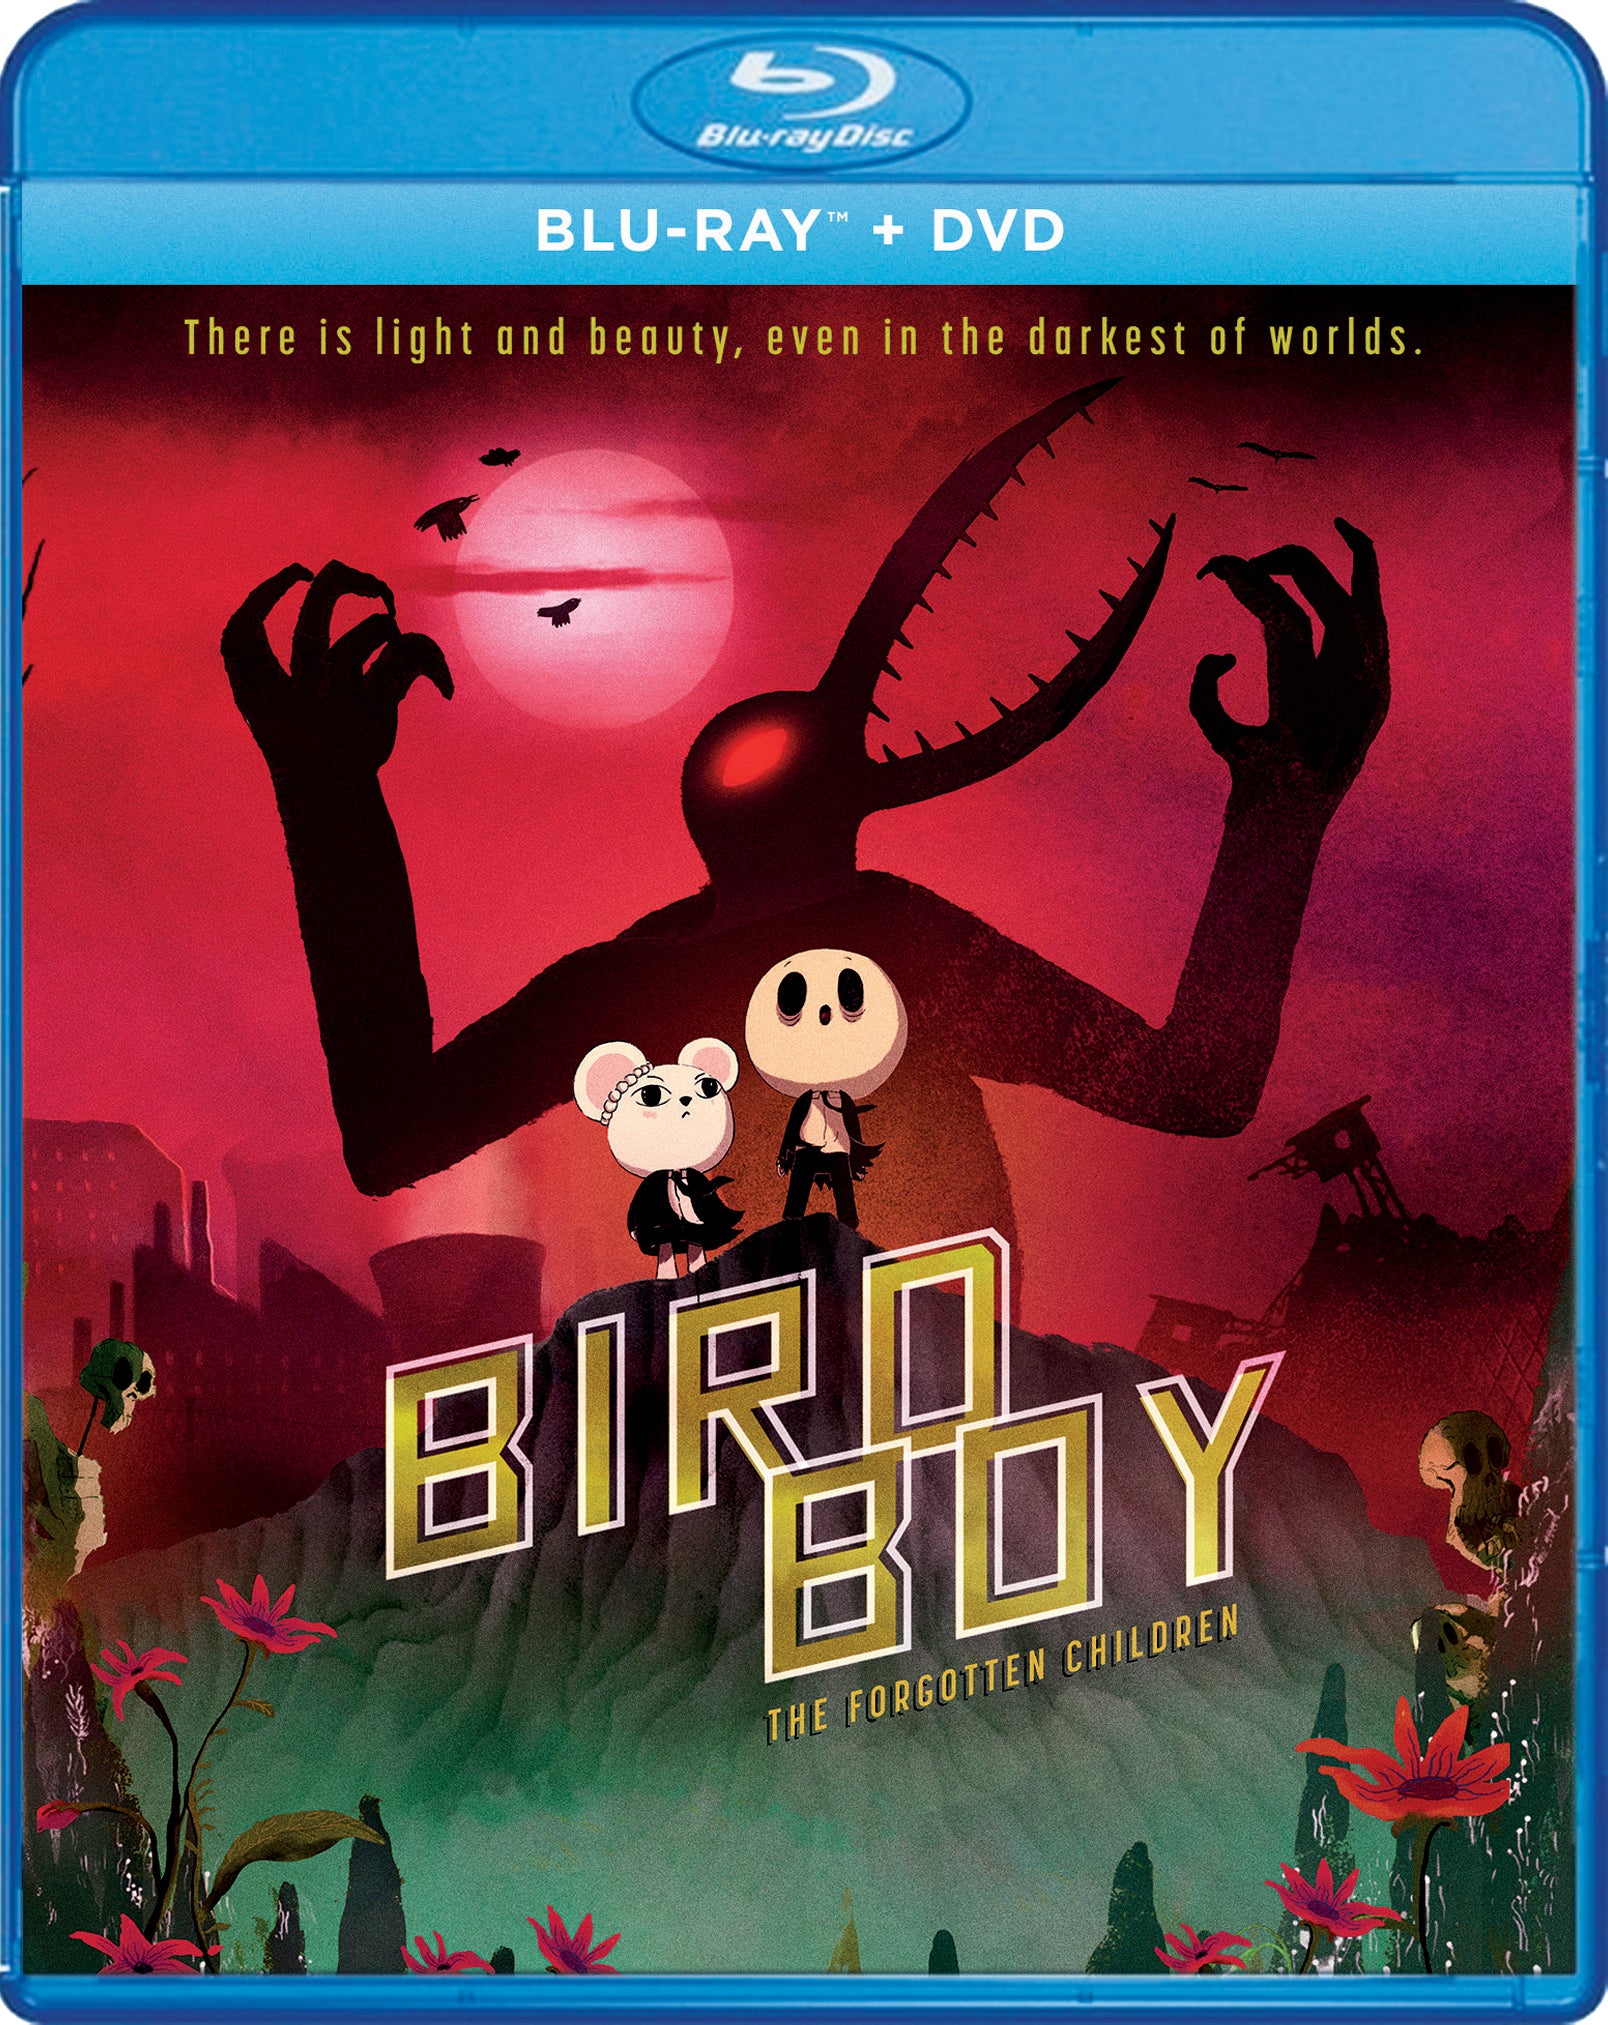 Birdboy: The Forgotten Children [Blu-ray/DVD] cover art